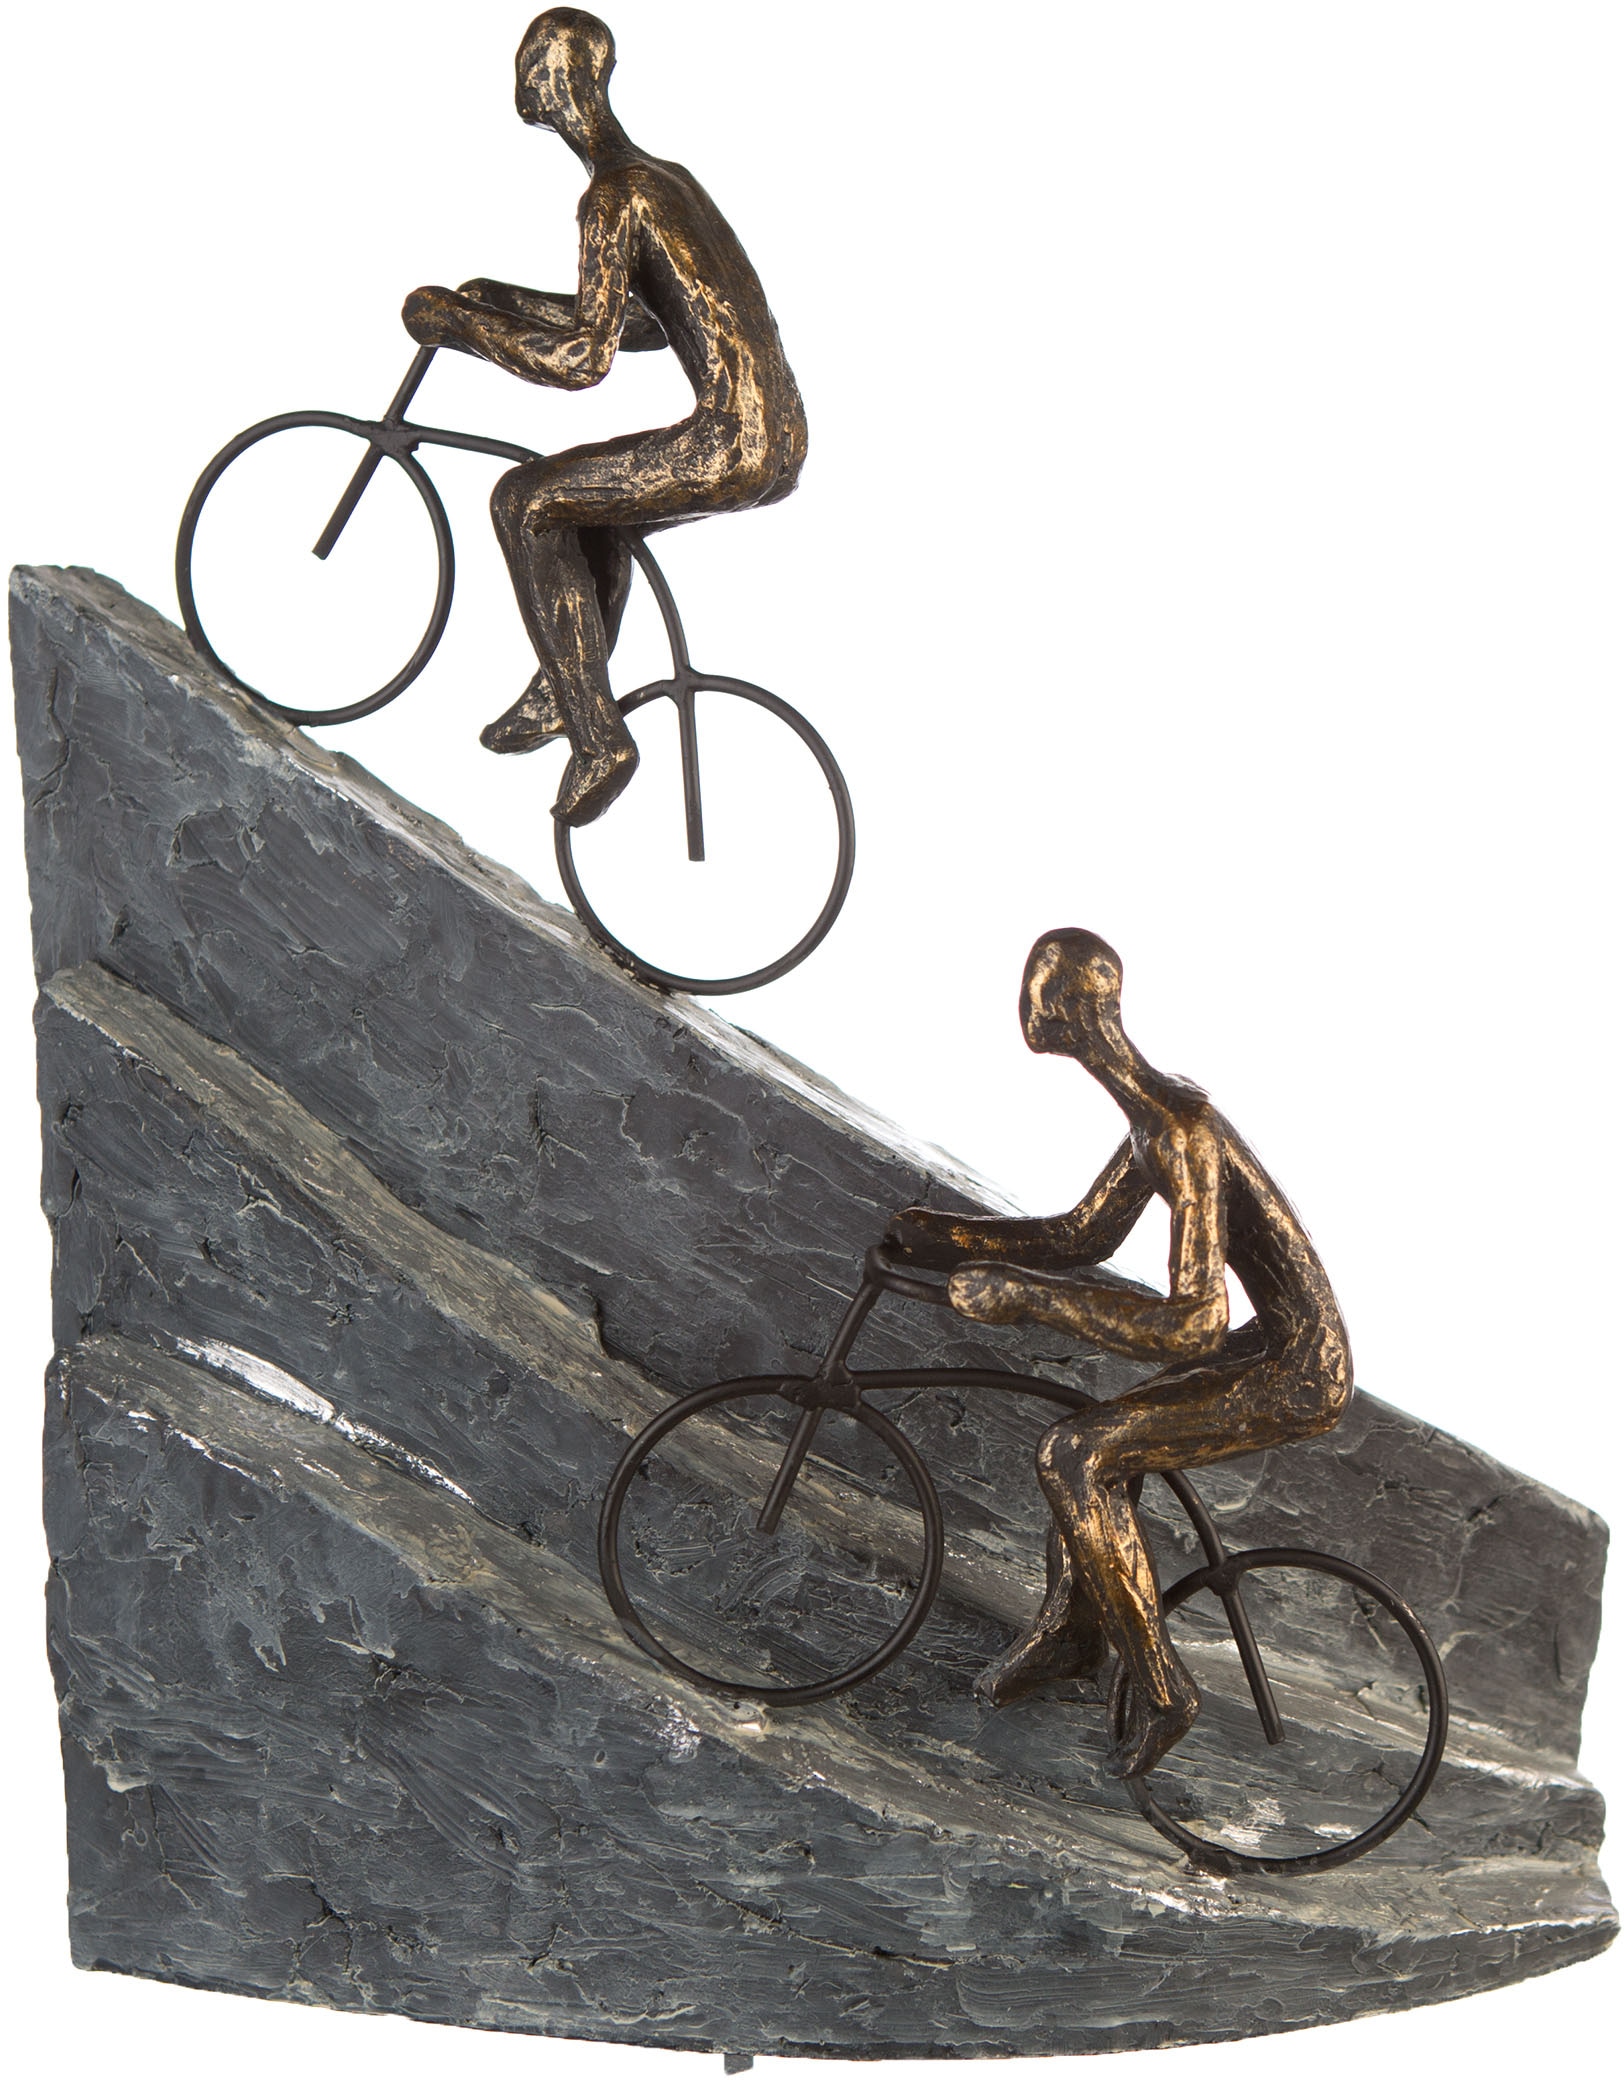 Racing, Dekofigur bronzefarben/grau, by Gilde Polyresin »Skulptur bronzefarben/grau«, Casablanca